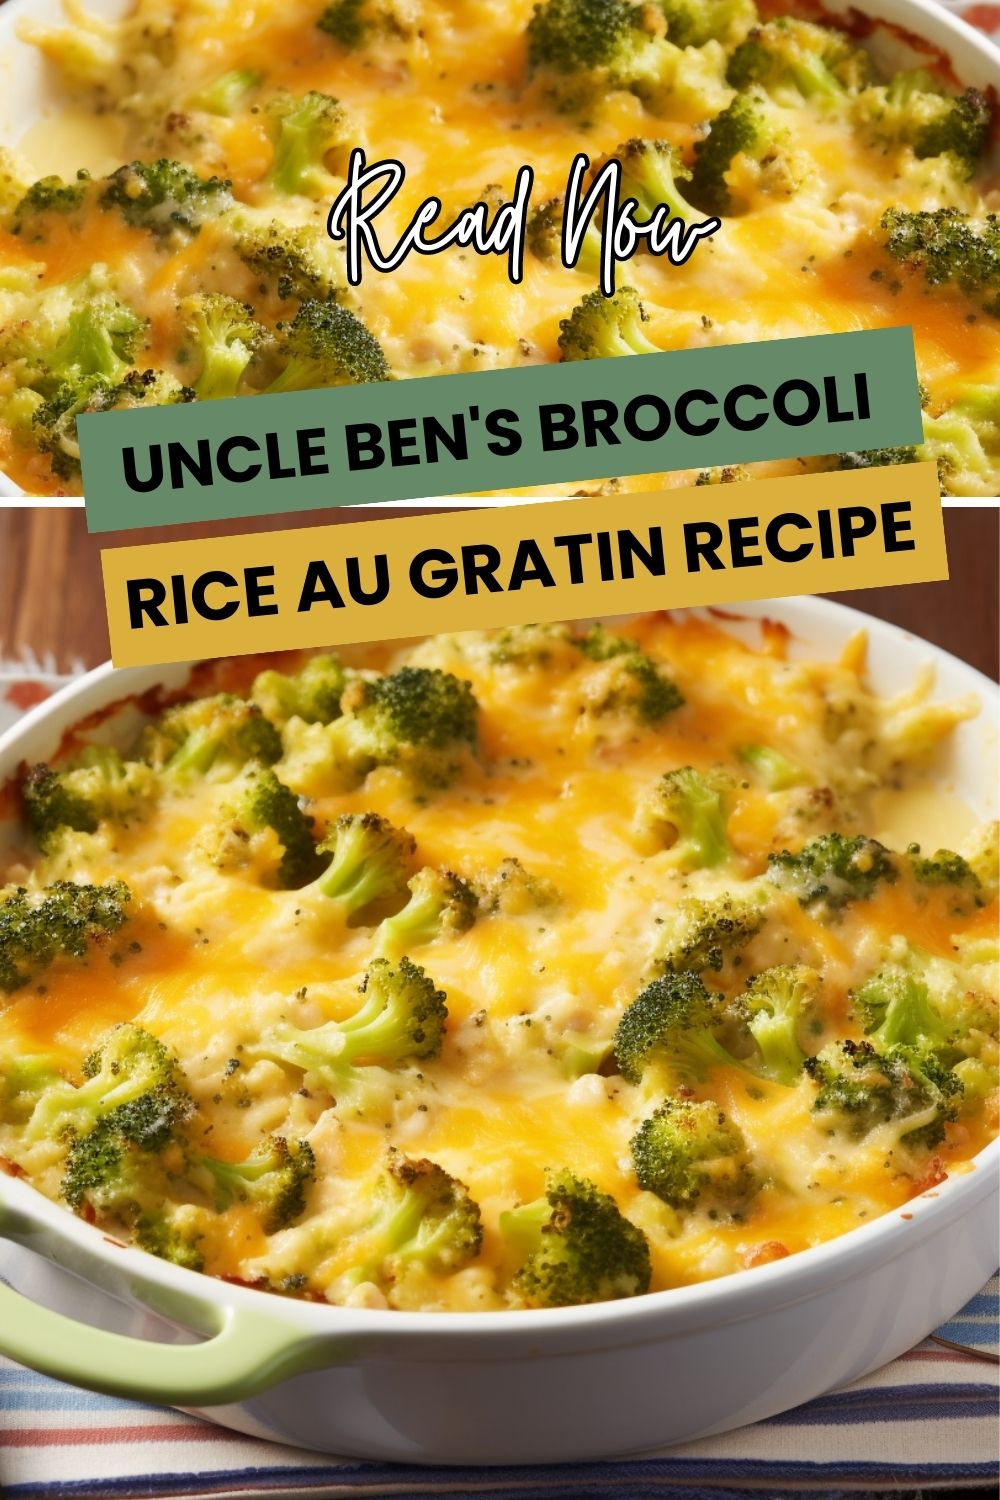 Uncle Ben's Broccoli Rice Au Gratin Recipe